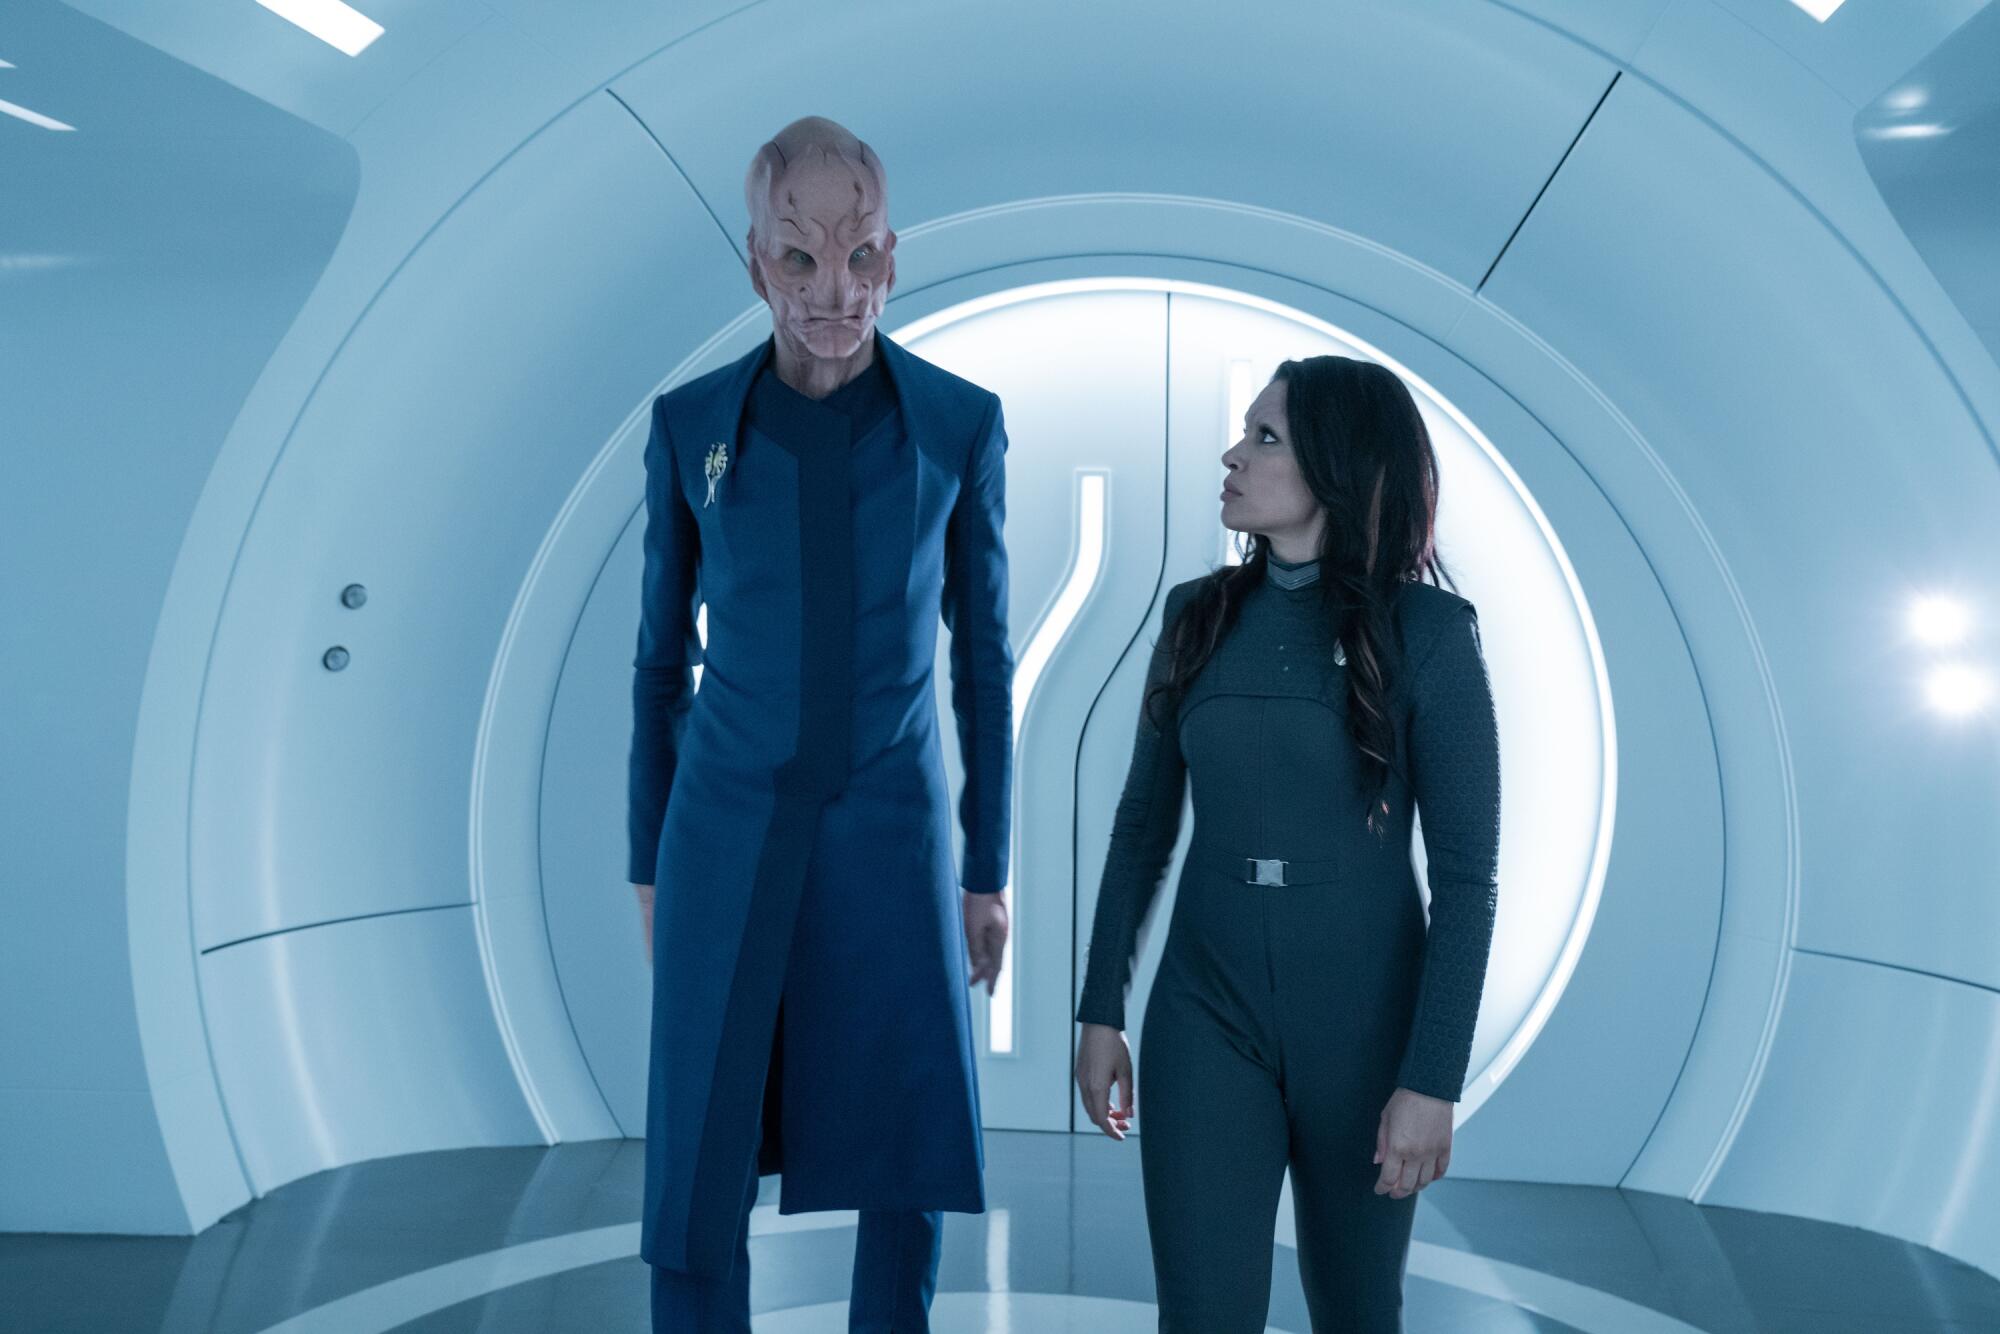 A tall, thin alien and a human woman walk through the tunnel of a spaceship.